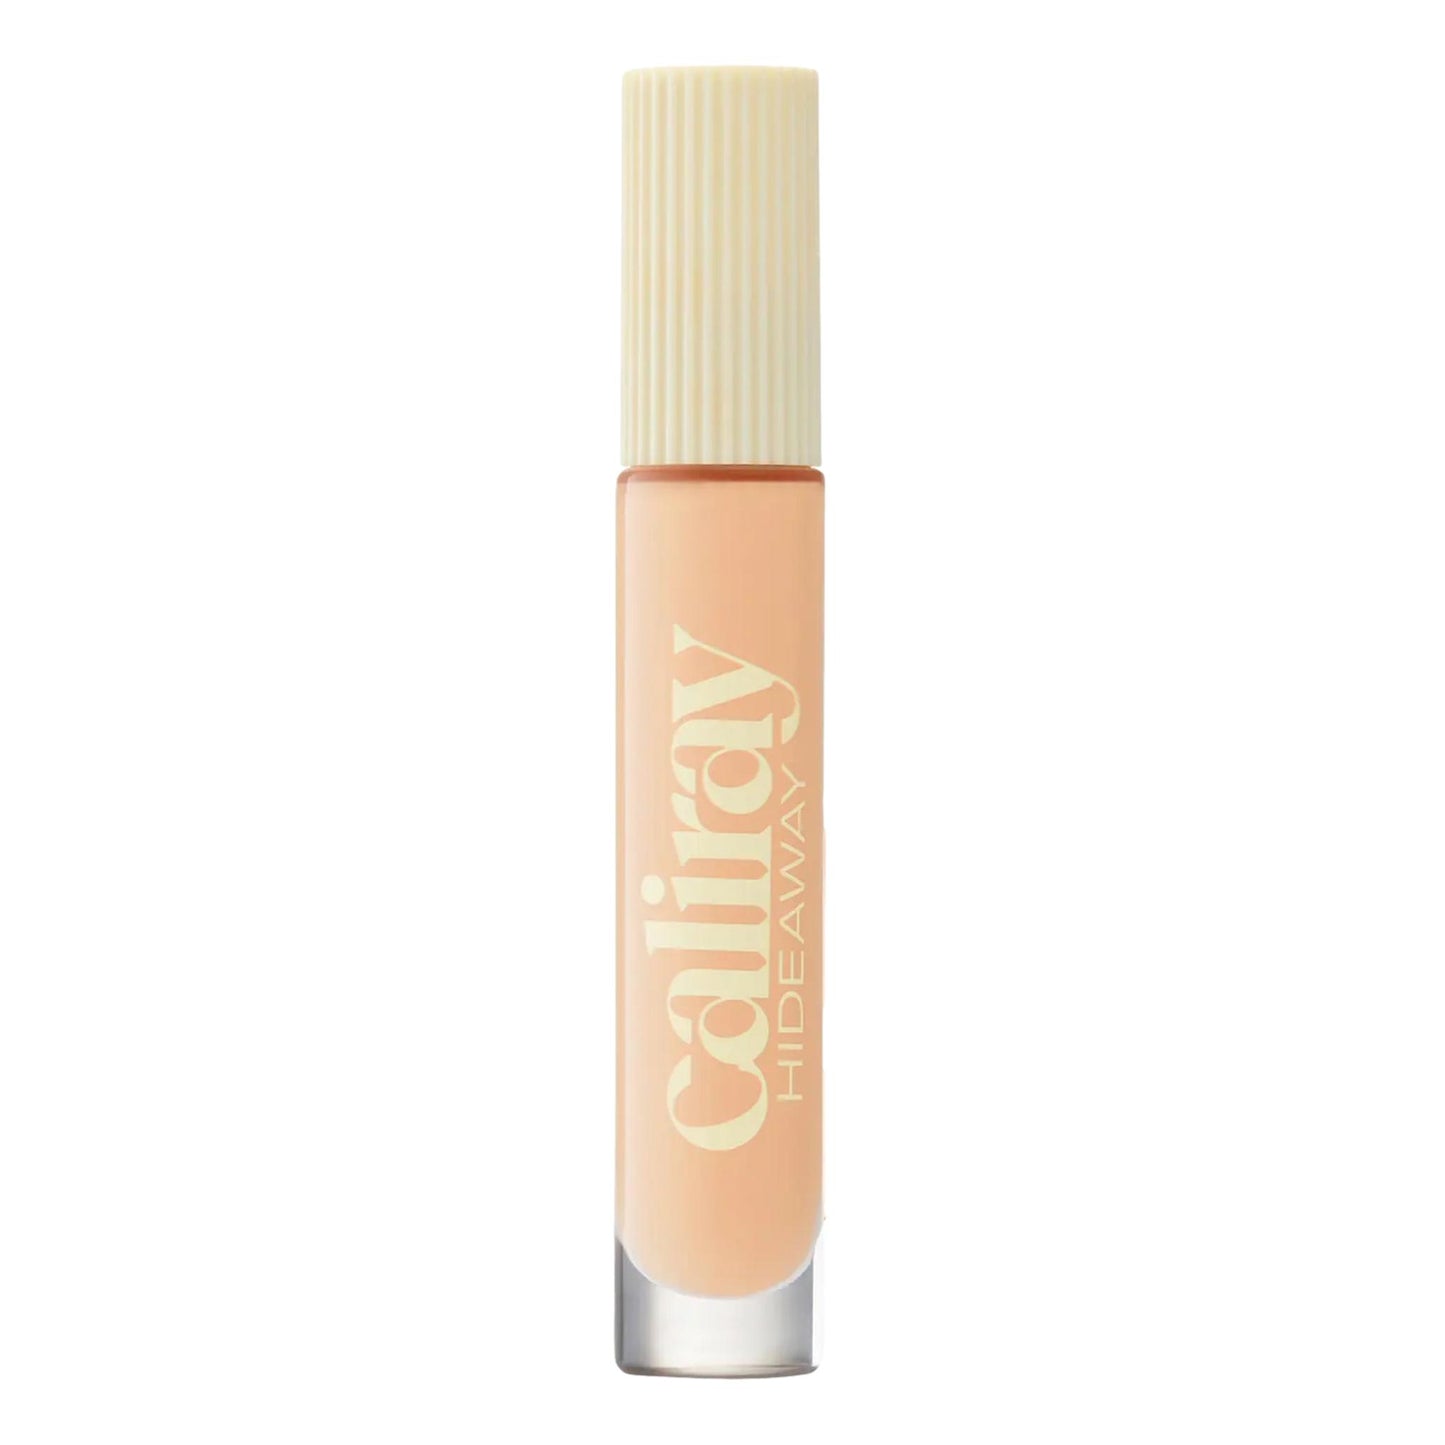 Caliray hideaway brightening + hydrating under eye colour corrector concealer